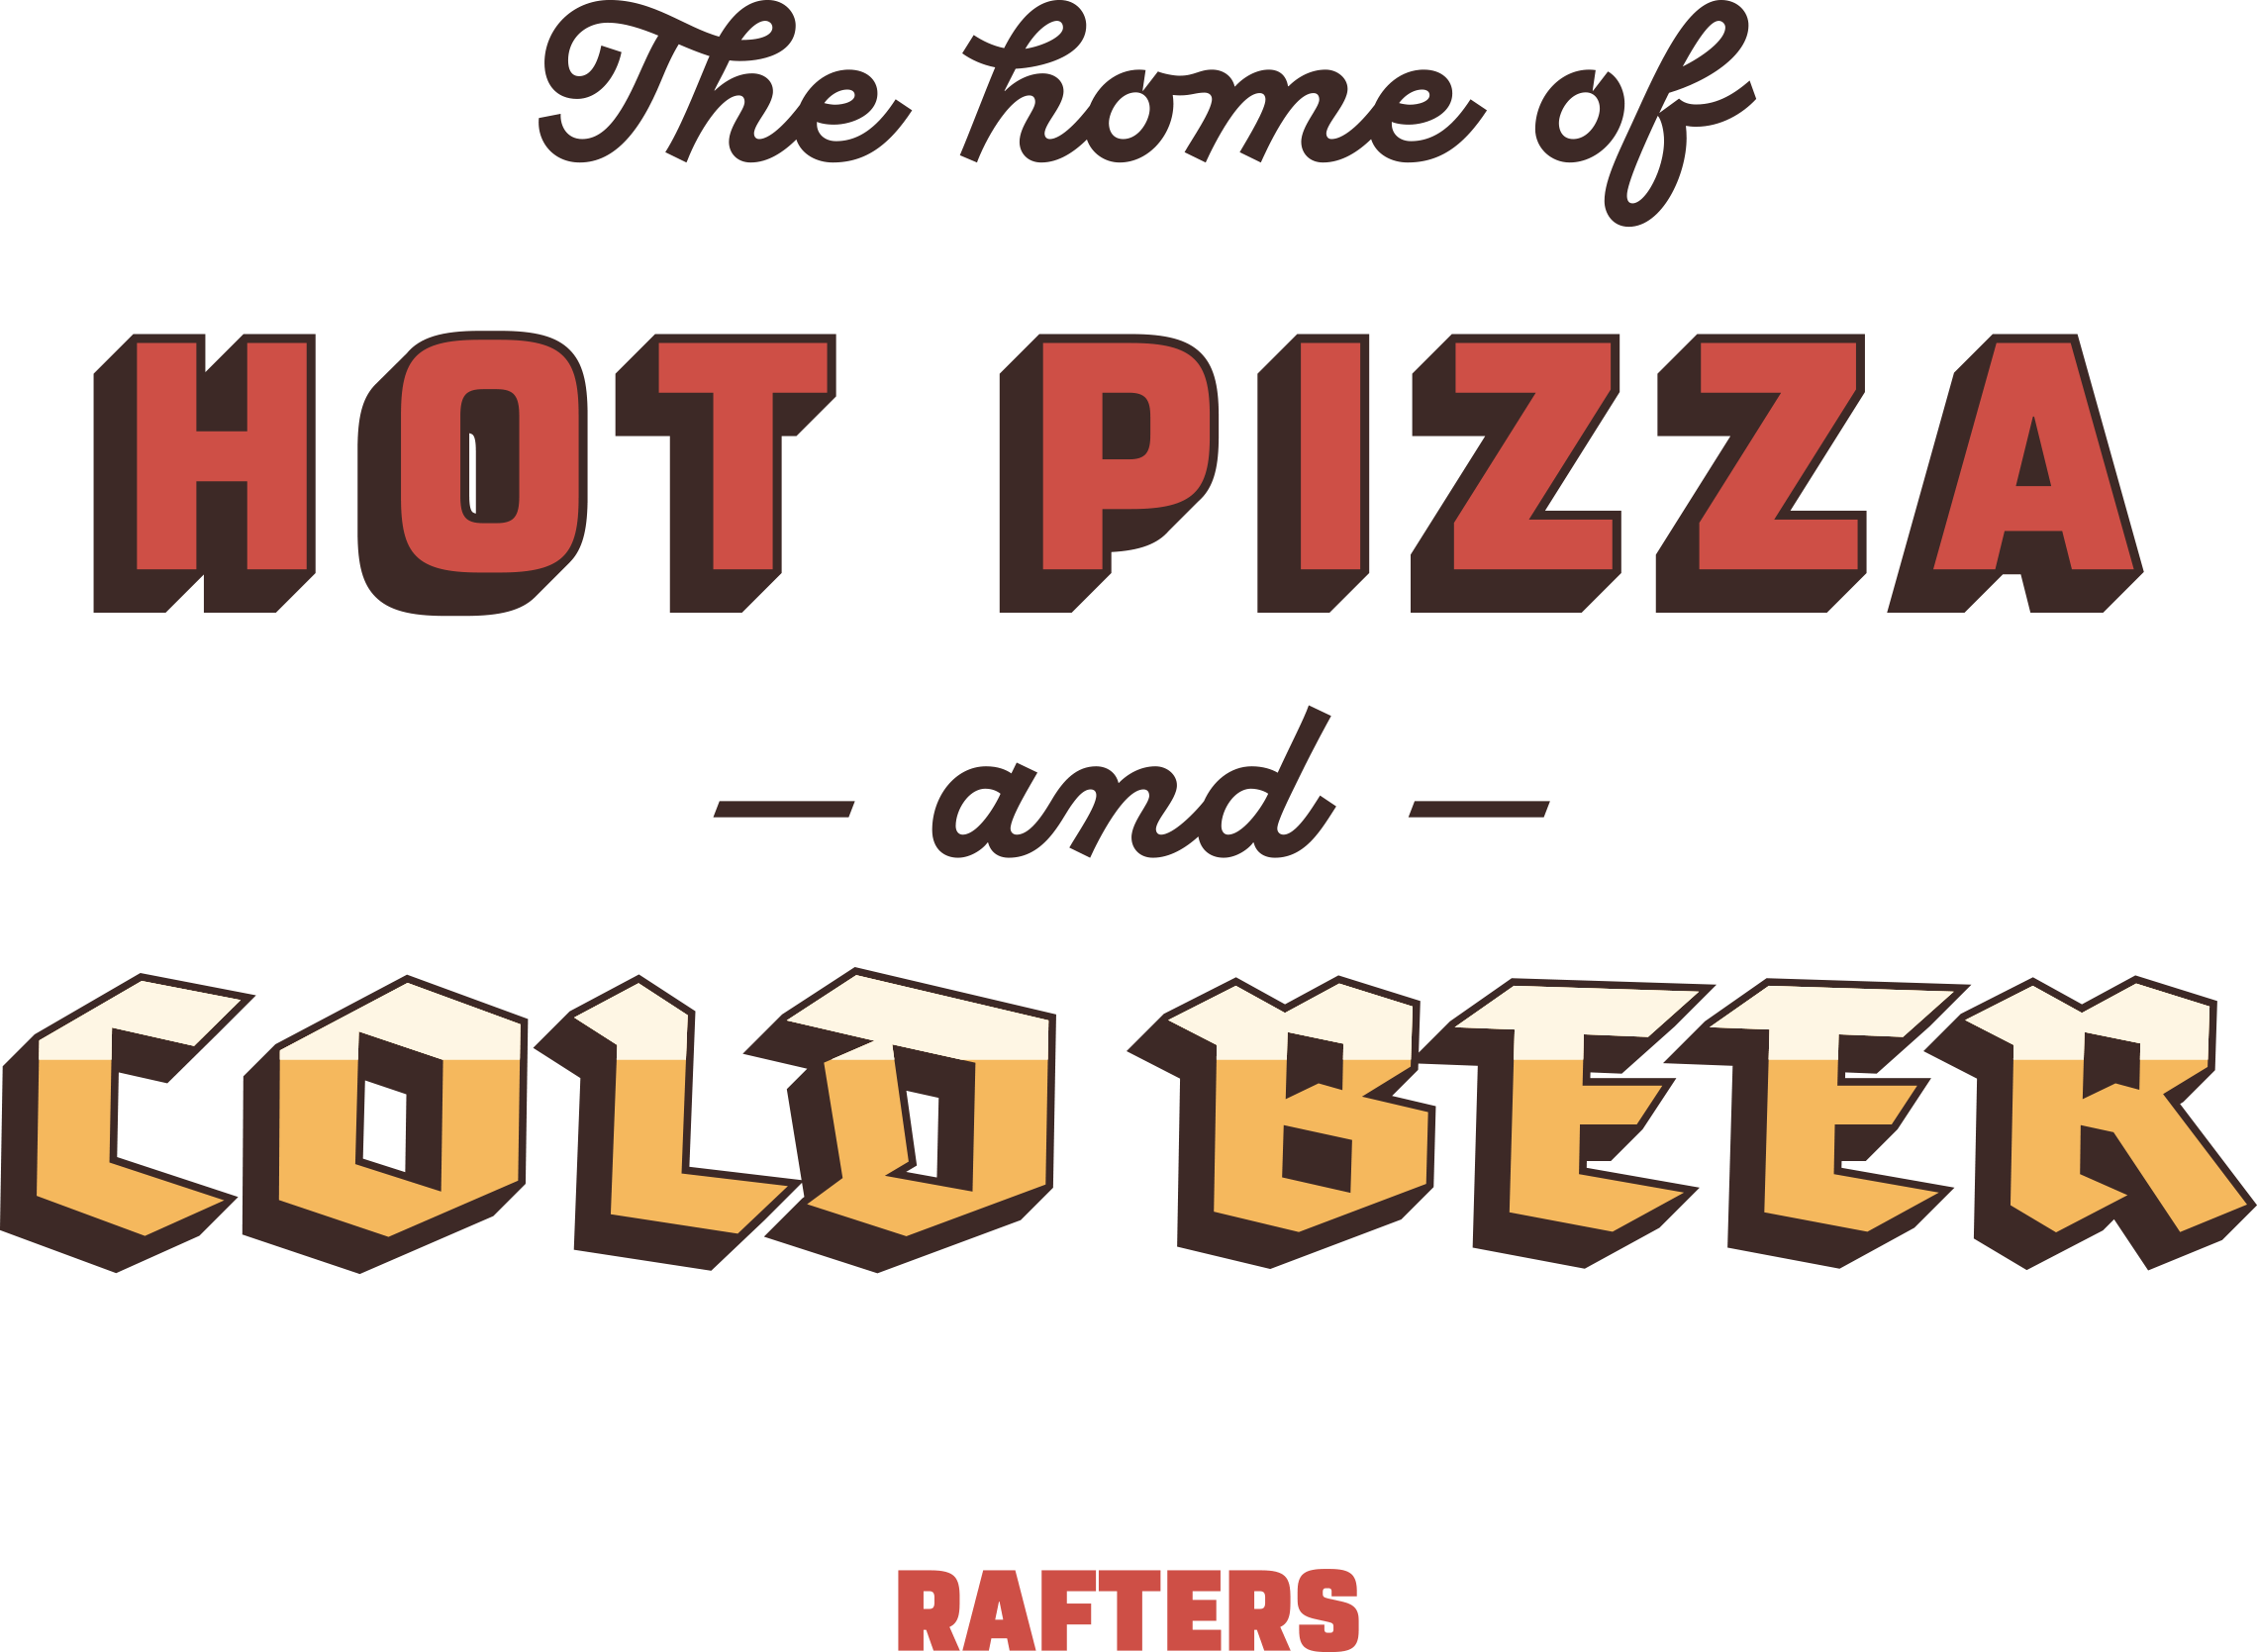 Rafters Draft & Dough - Branding